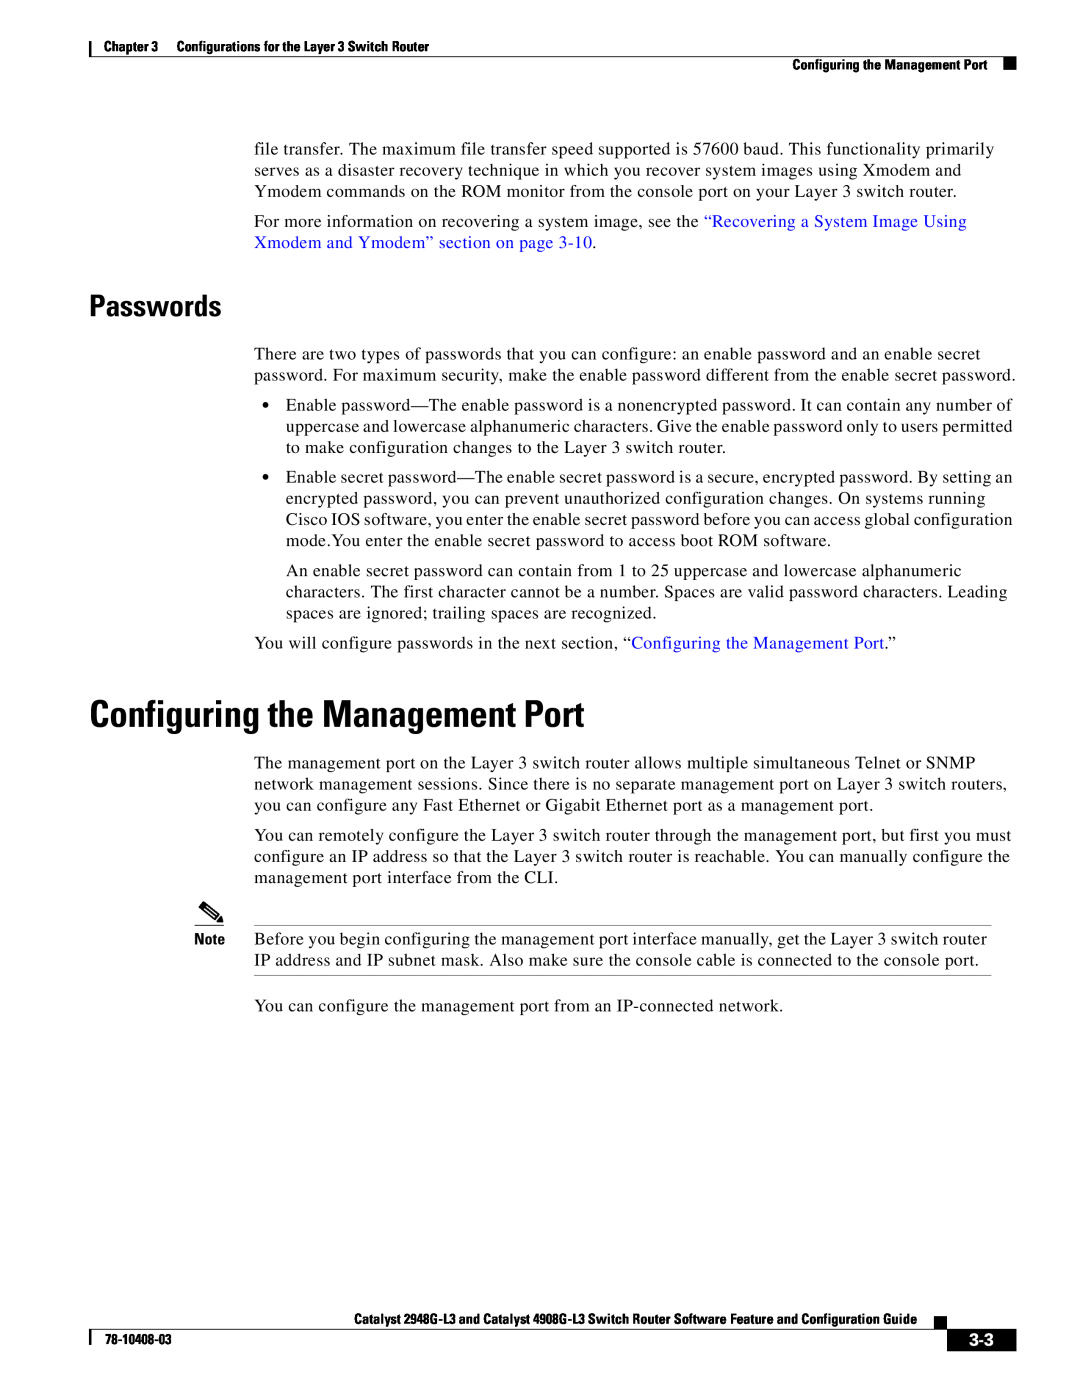 Cisco Systems 2948G-L3, 4908G-L3 manual Configuring the Management Port, Passwords 